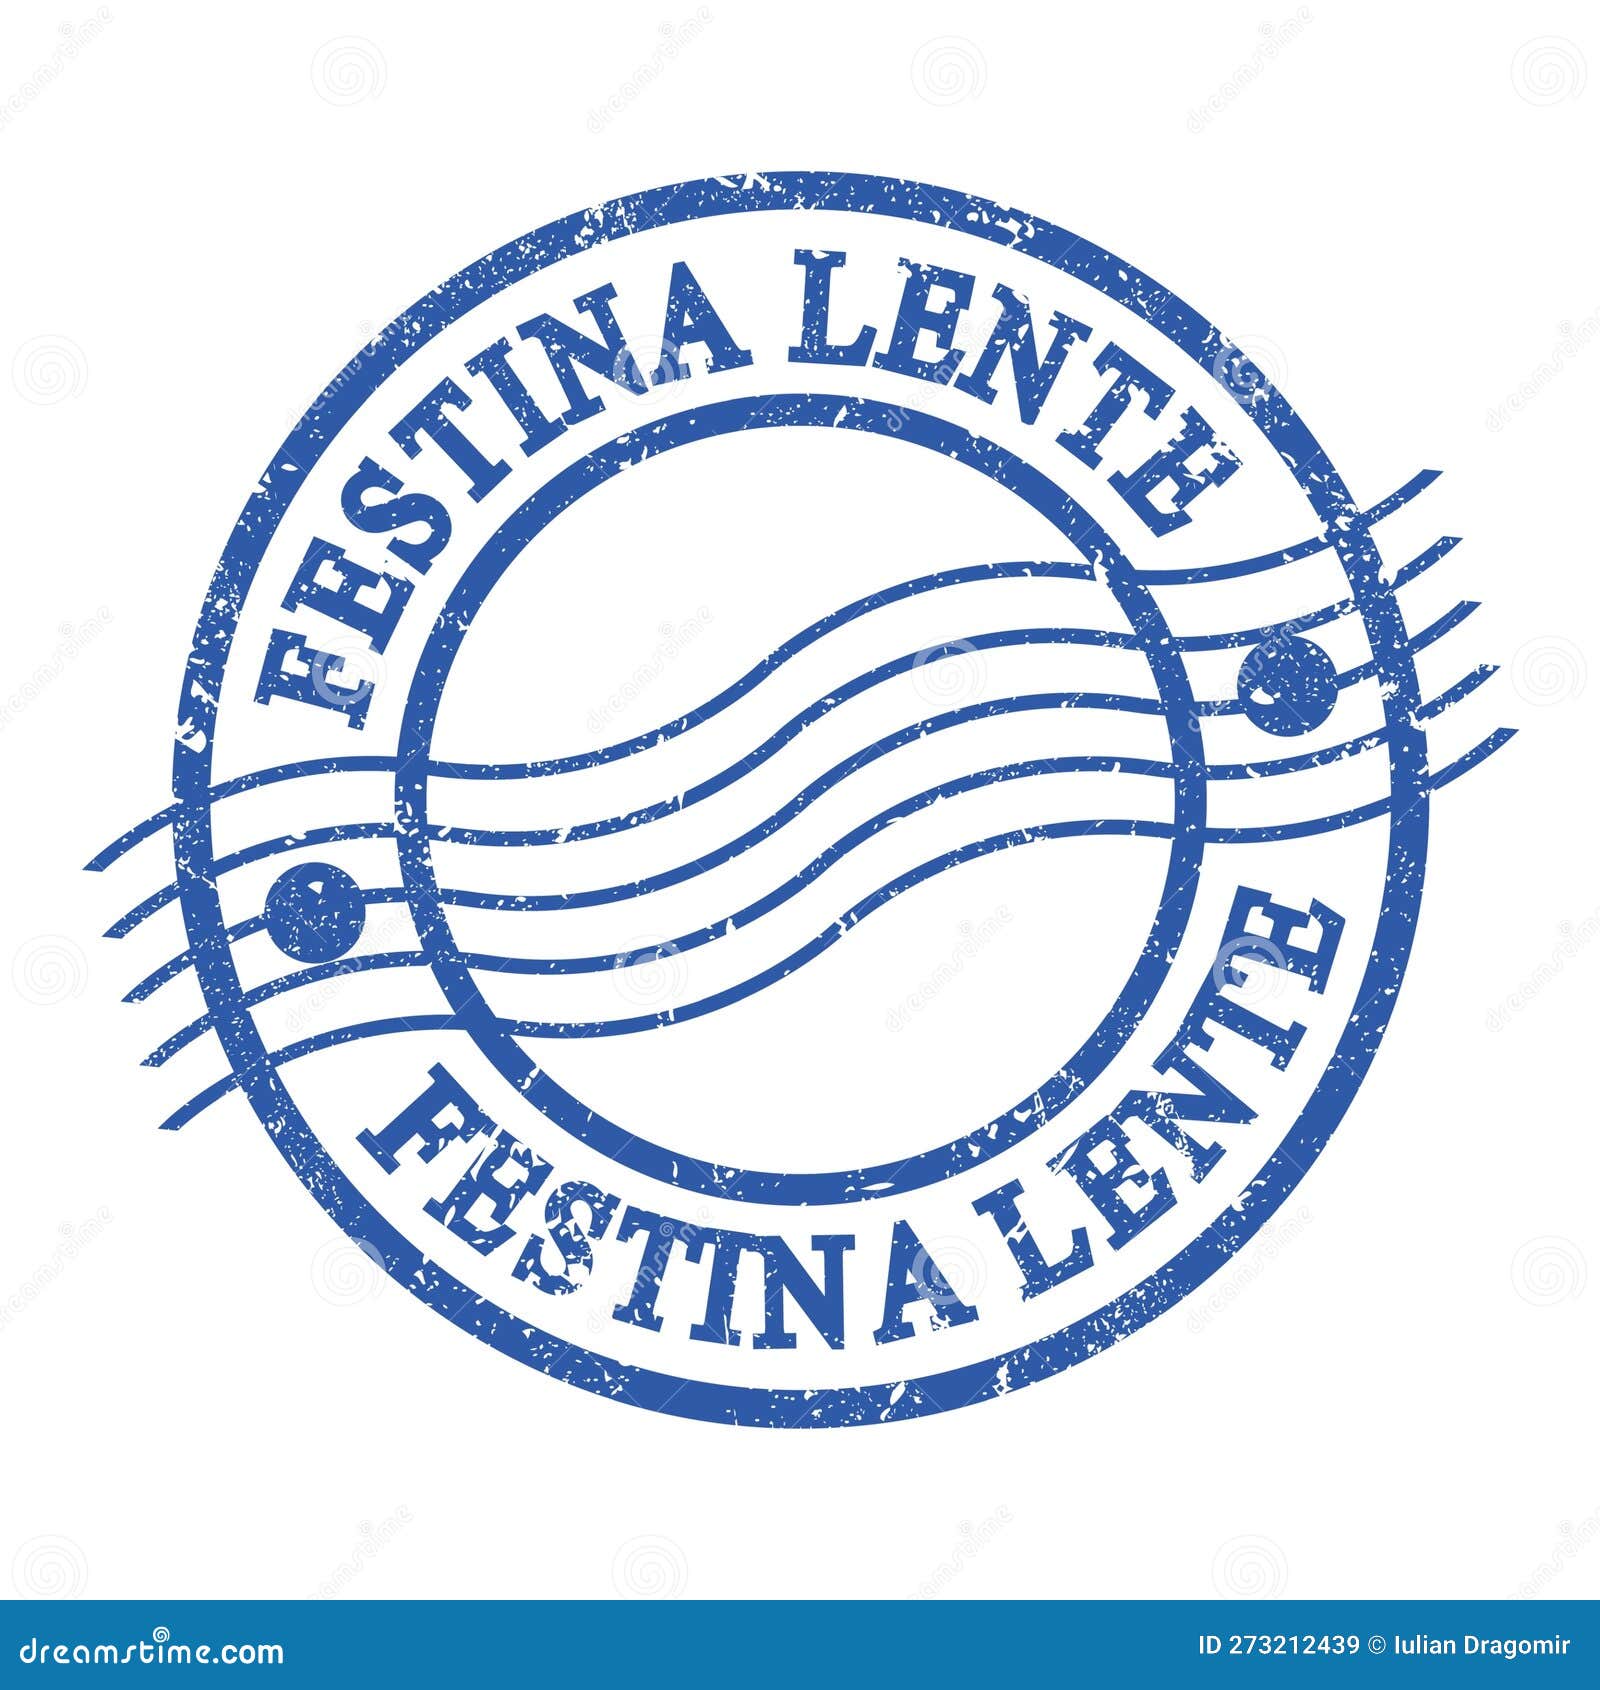 festina lente, text written on blue postal stamp